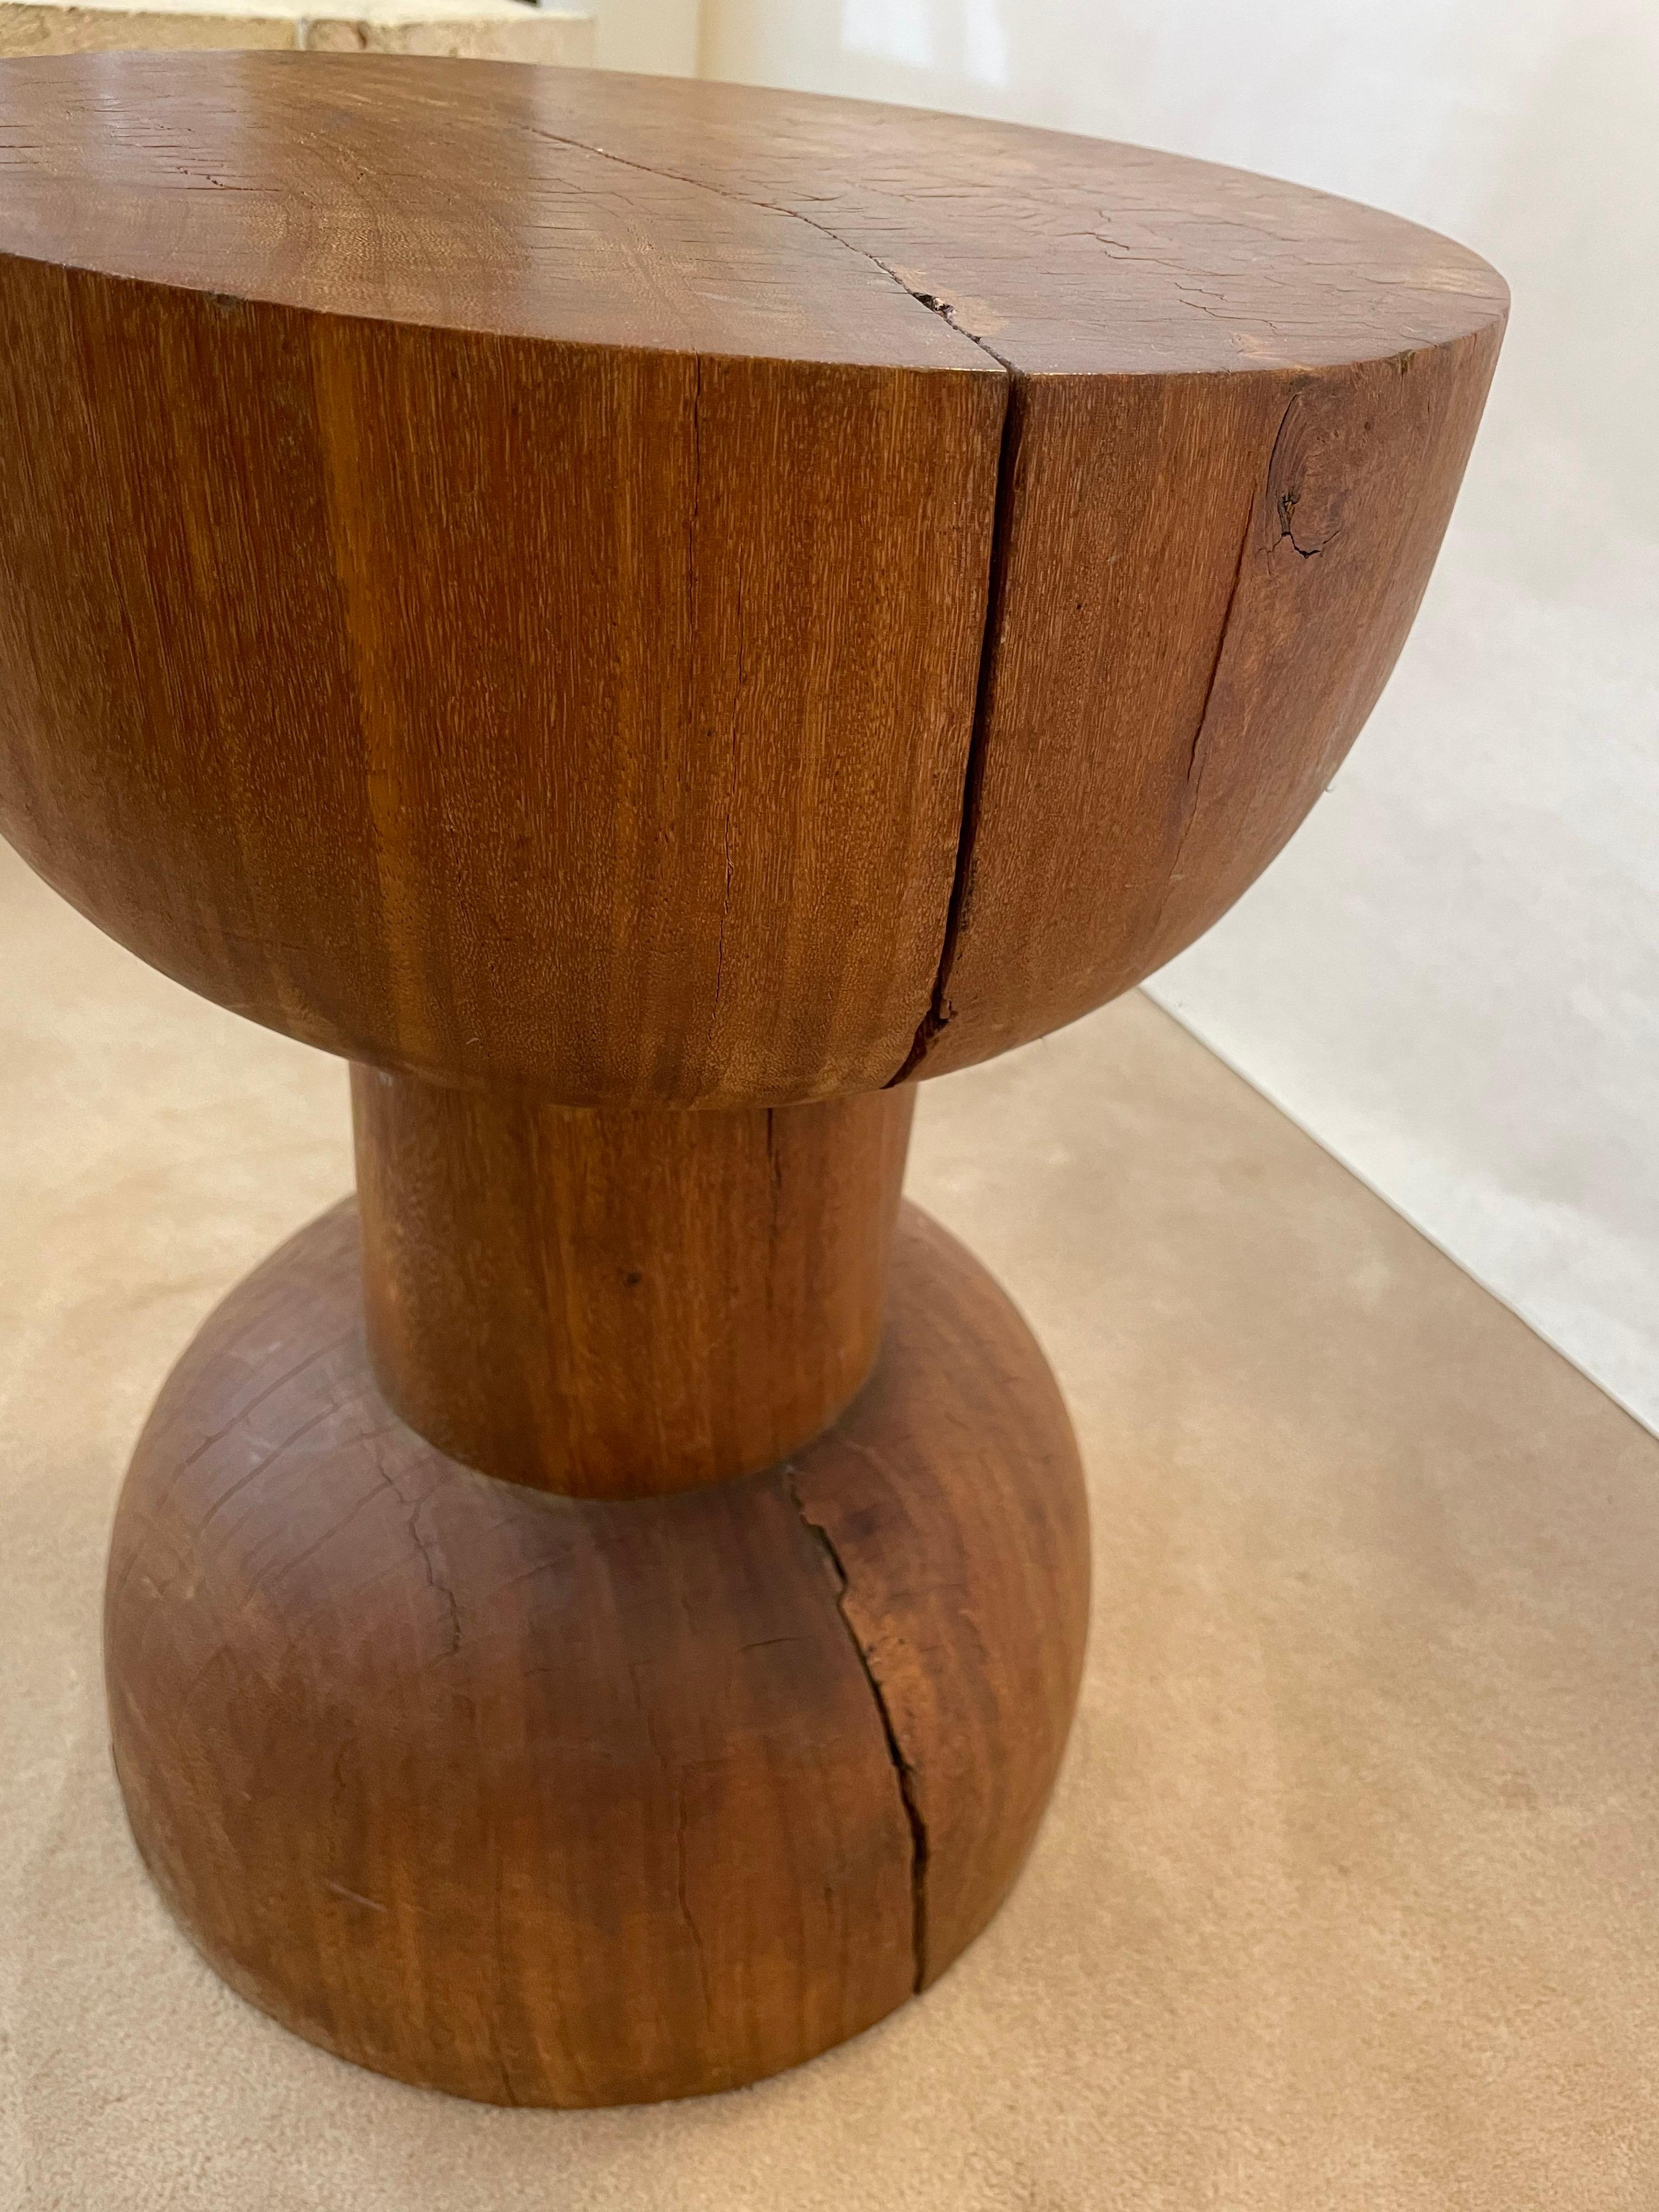 Rustic Sculptural Brazilian Side Table or Stool in Hardwood 